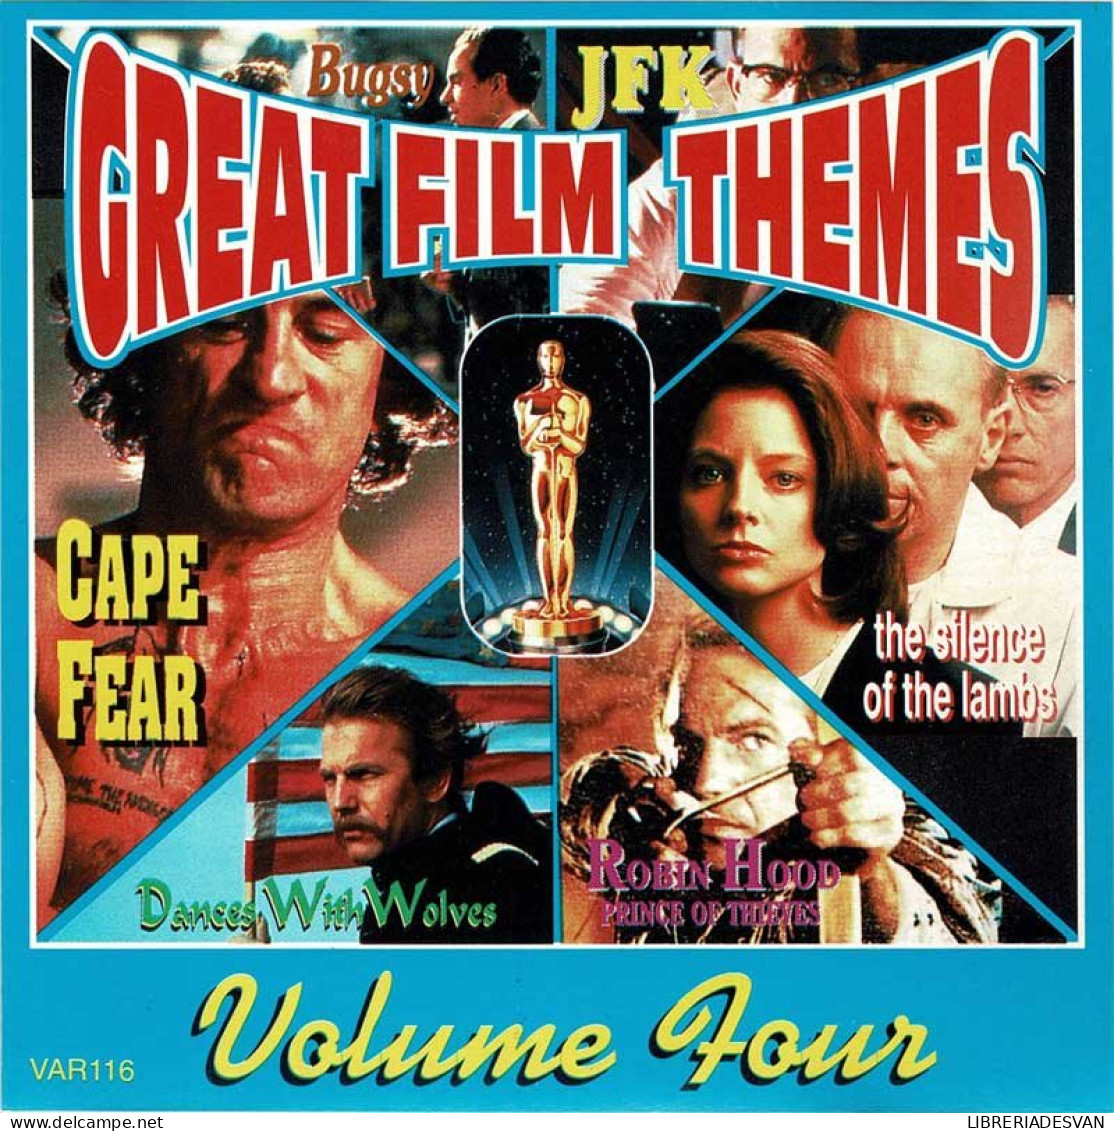 Great Film Themes Volume Four. CD - Filmmusik